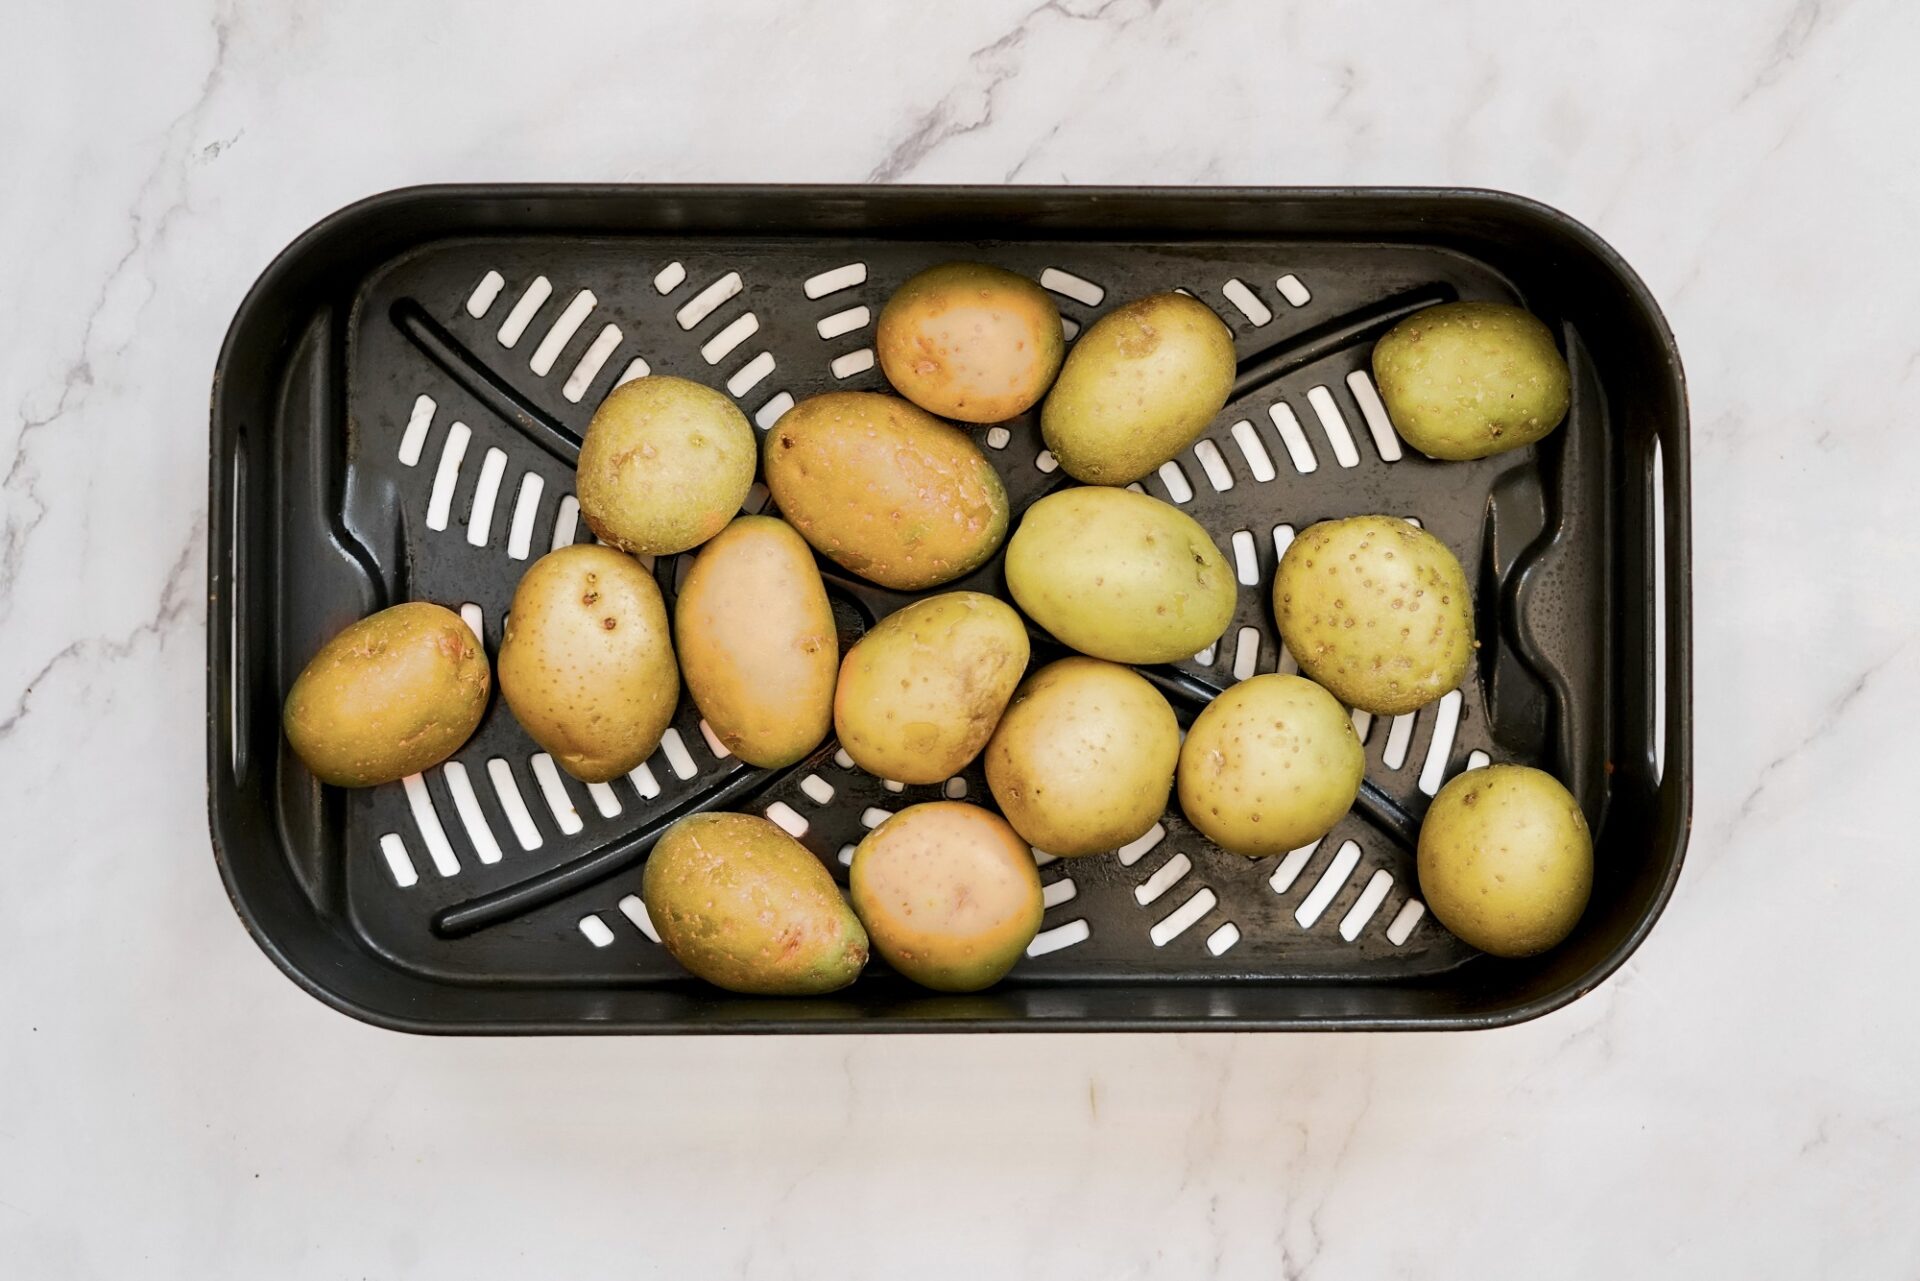 Mini potatoes in the air fryer basket.